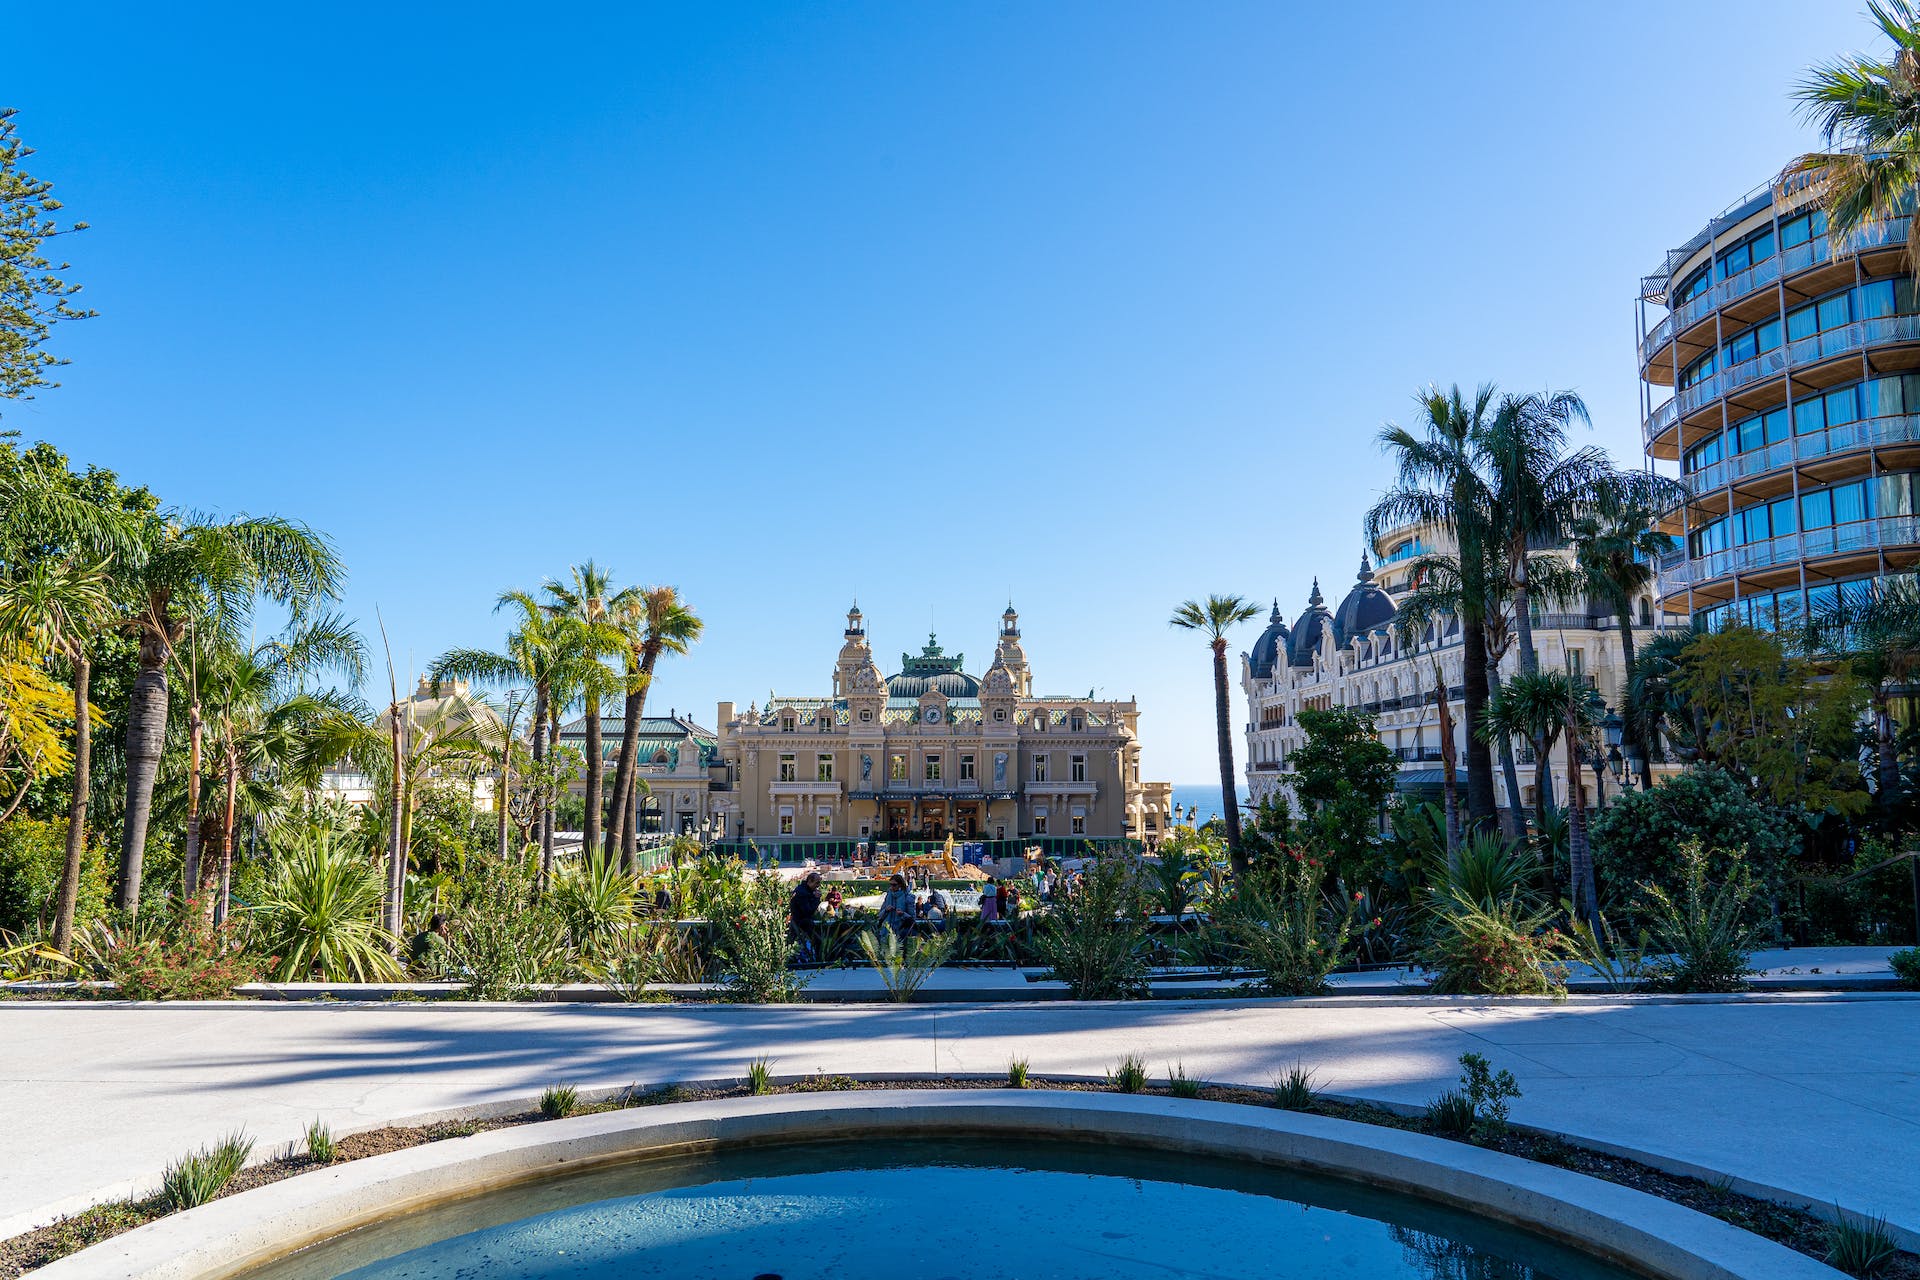 A resort-style swimming pool in Monaco